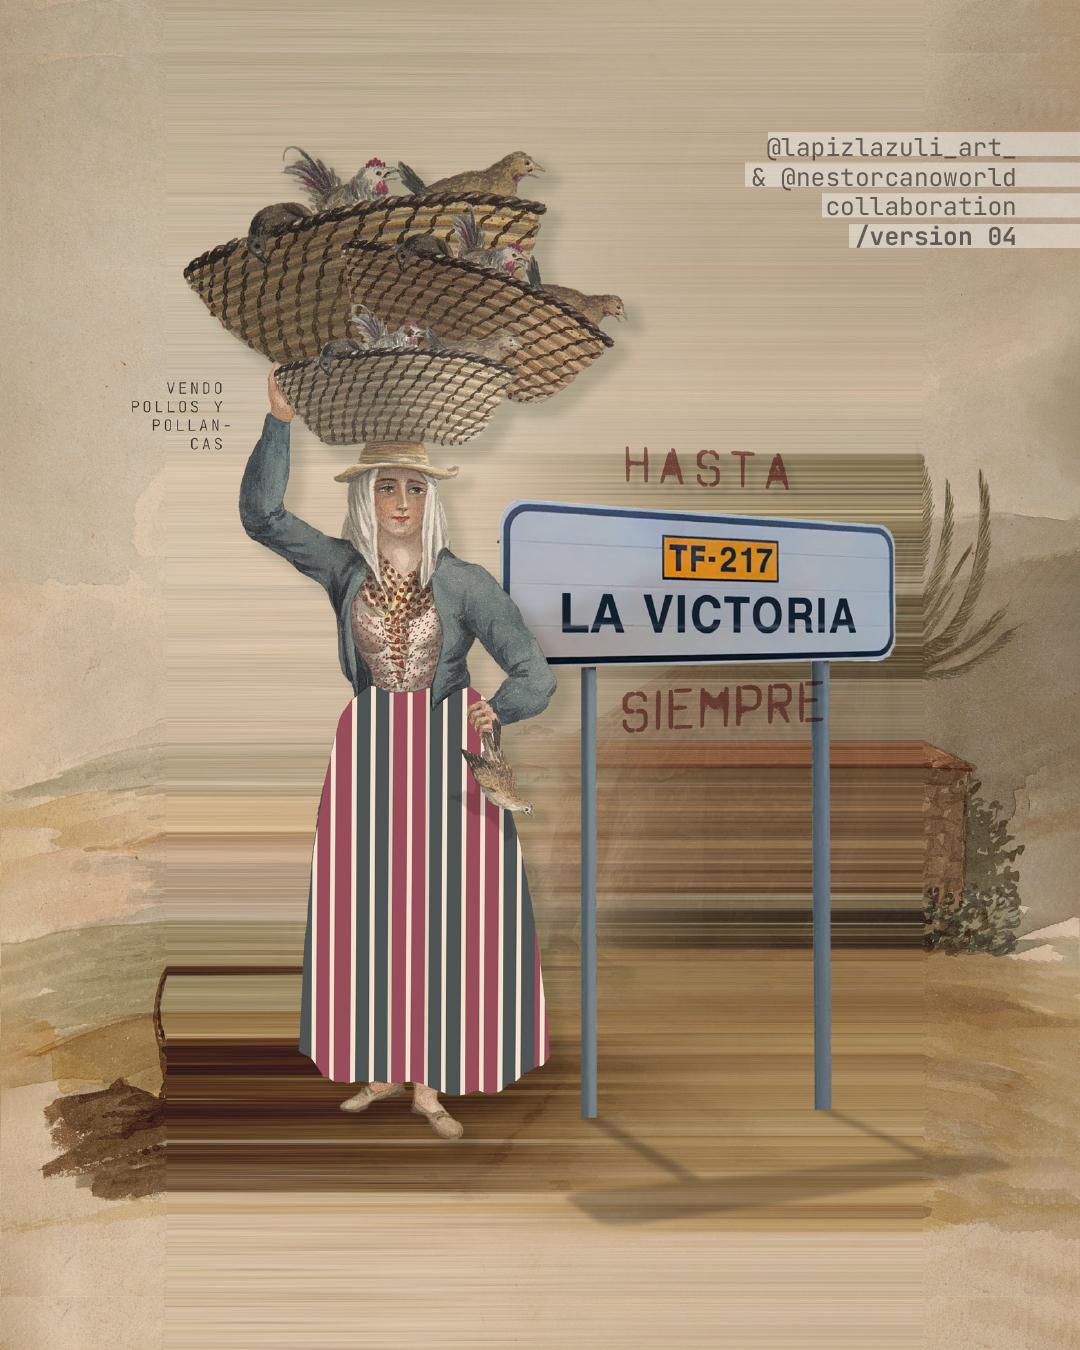 Hasta La Victoria. Collage colaborativo con Néstor Cano